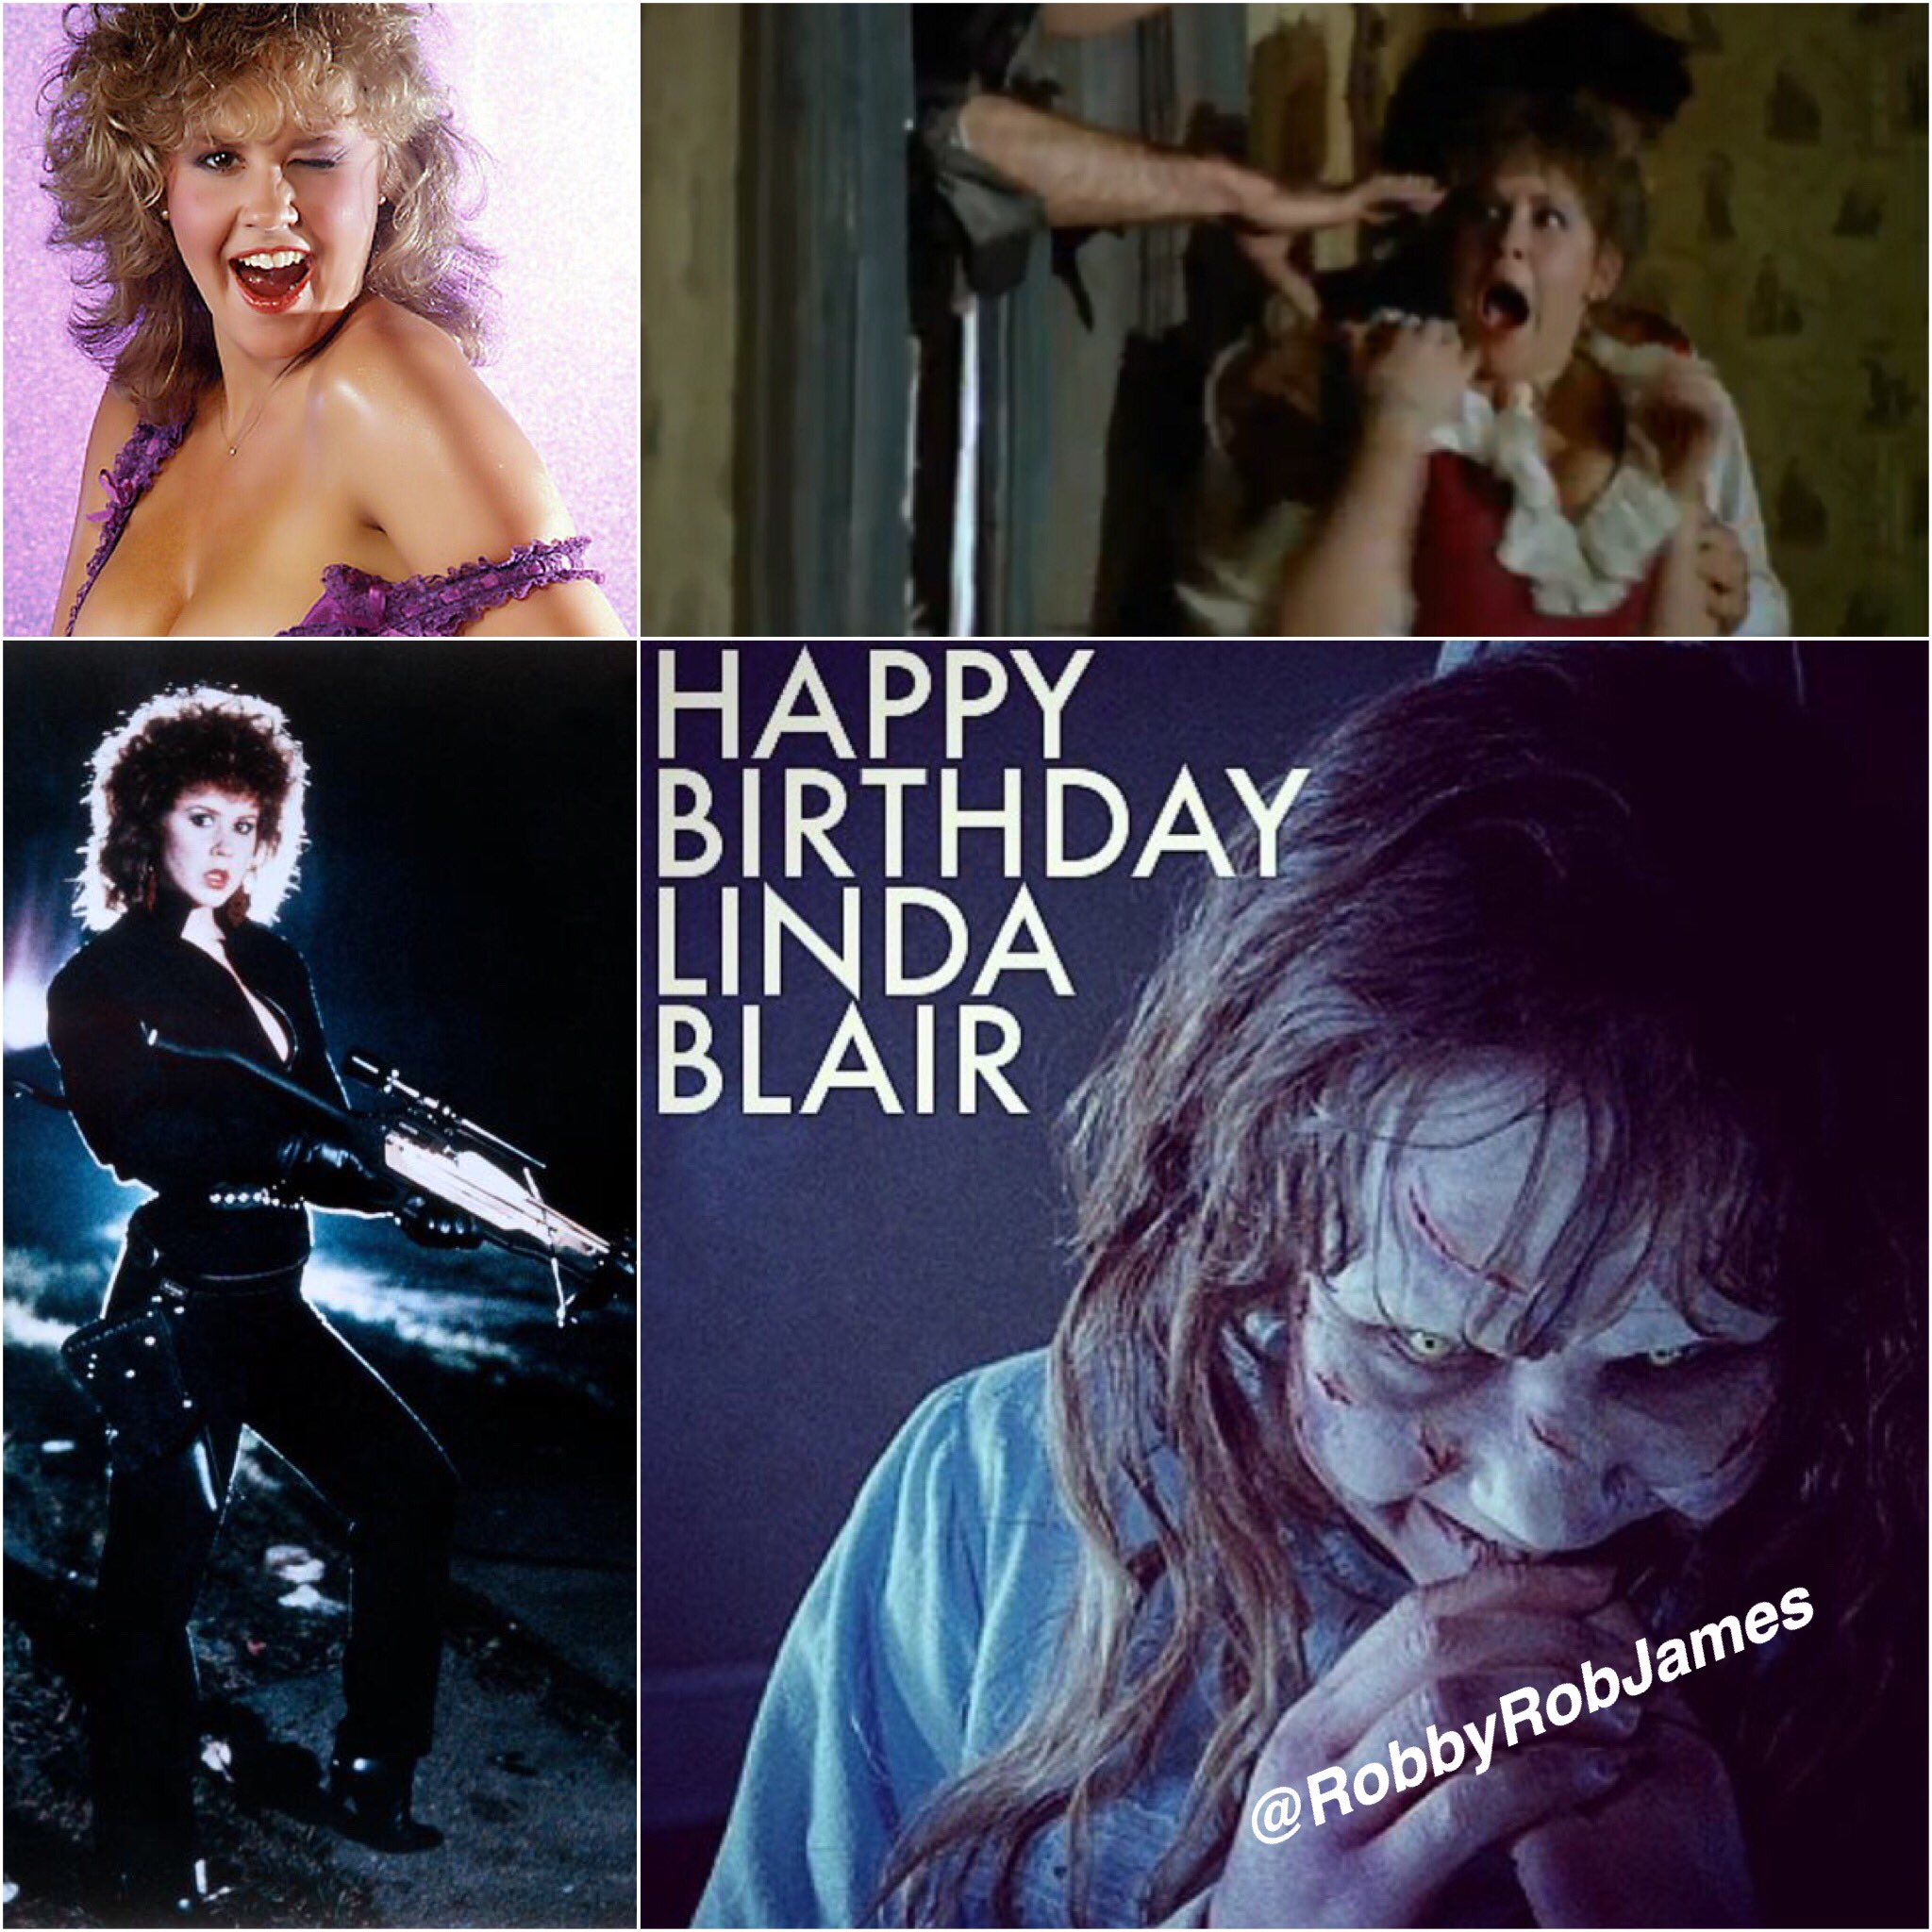 Happy birthday Linda Blair         